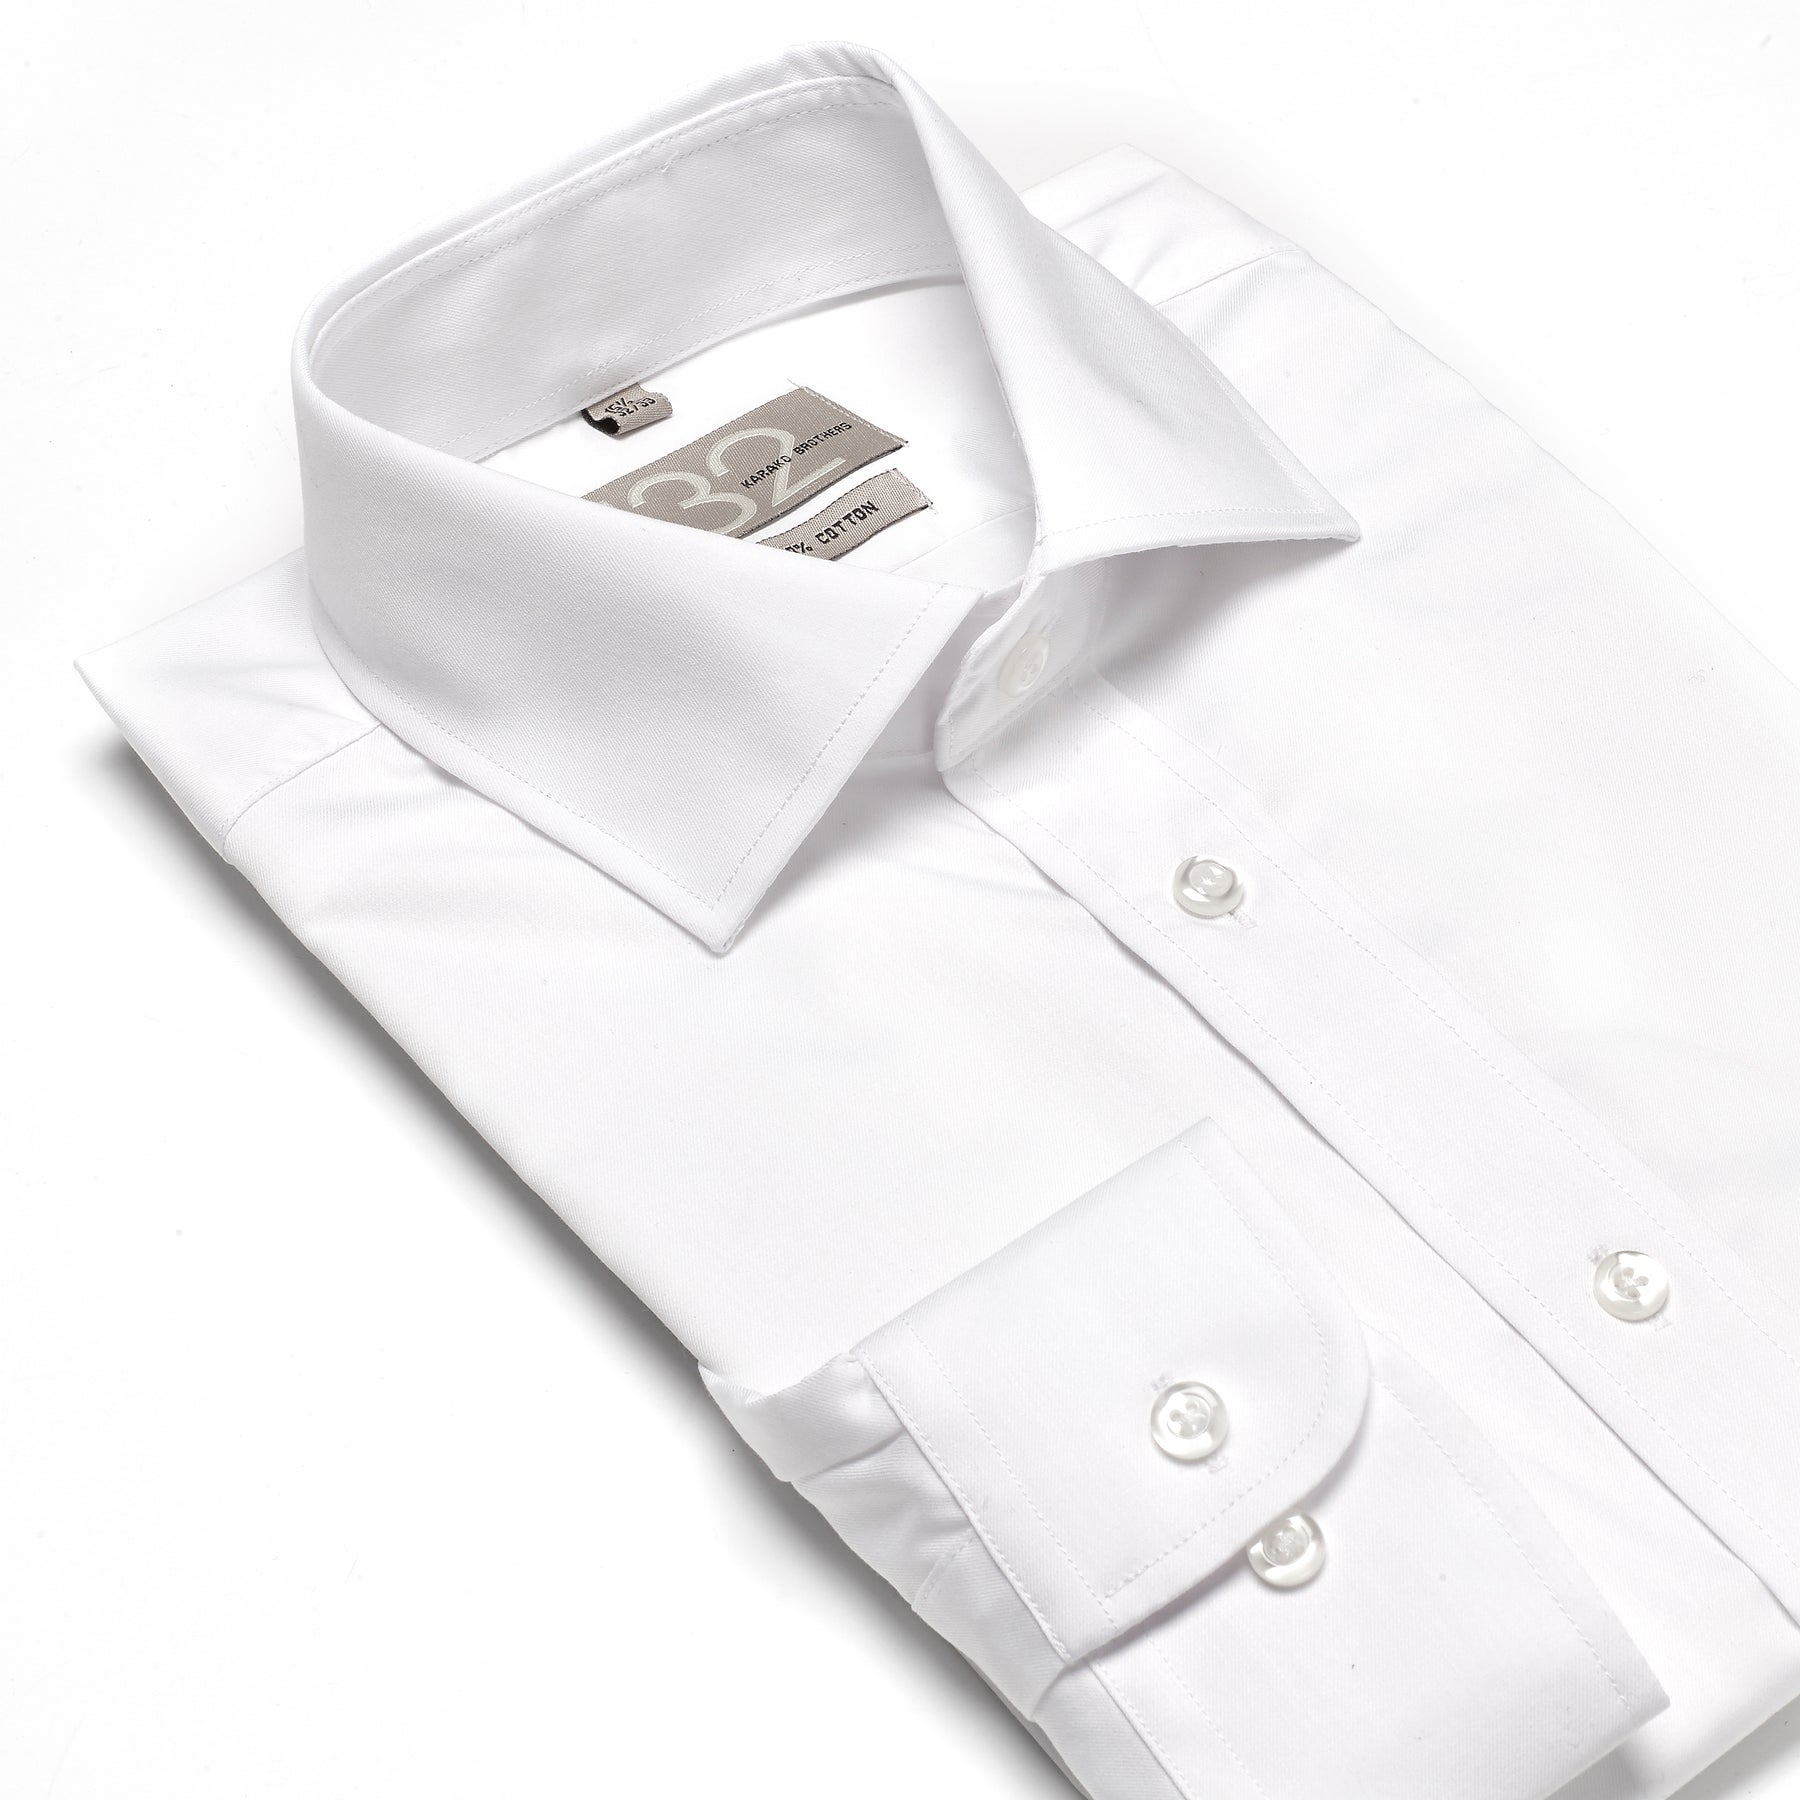 100 cotton white dress shirts